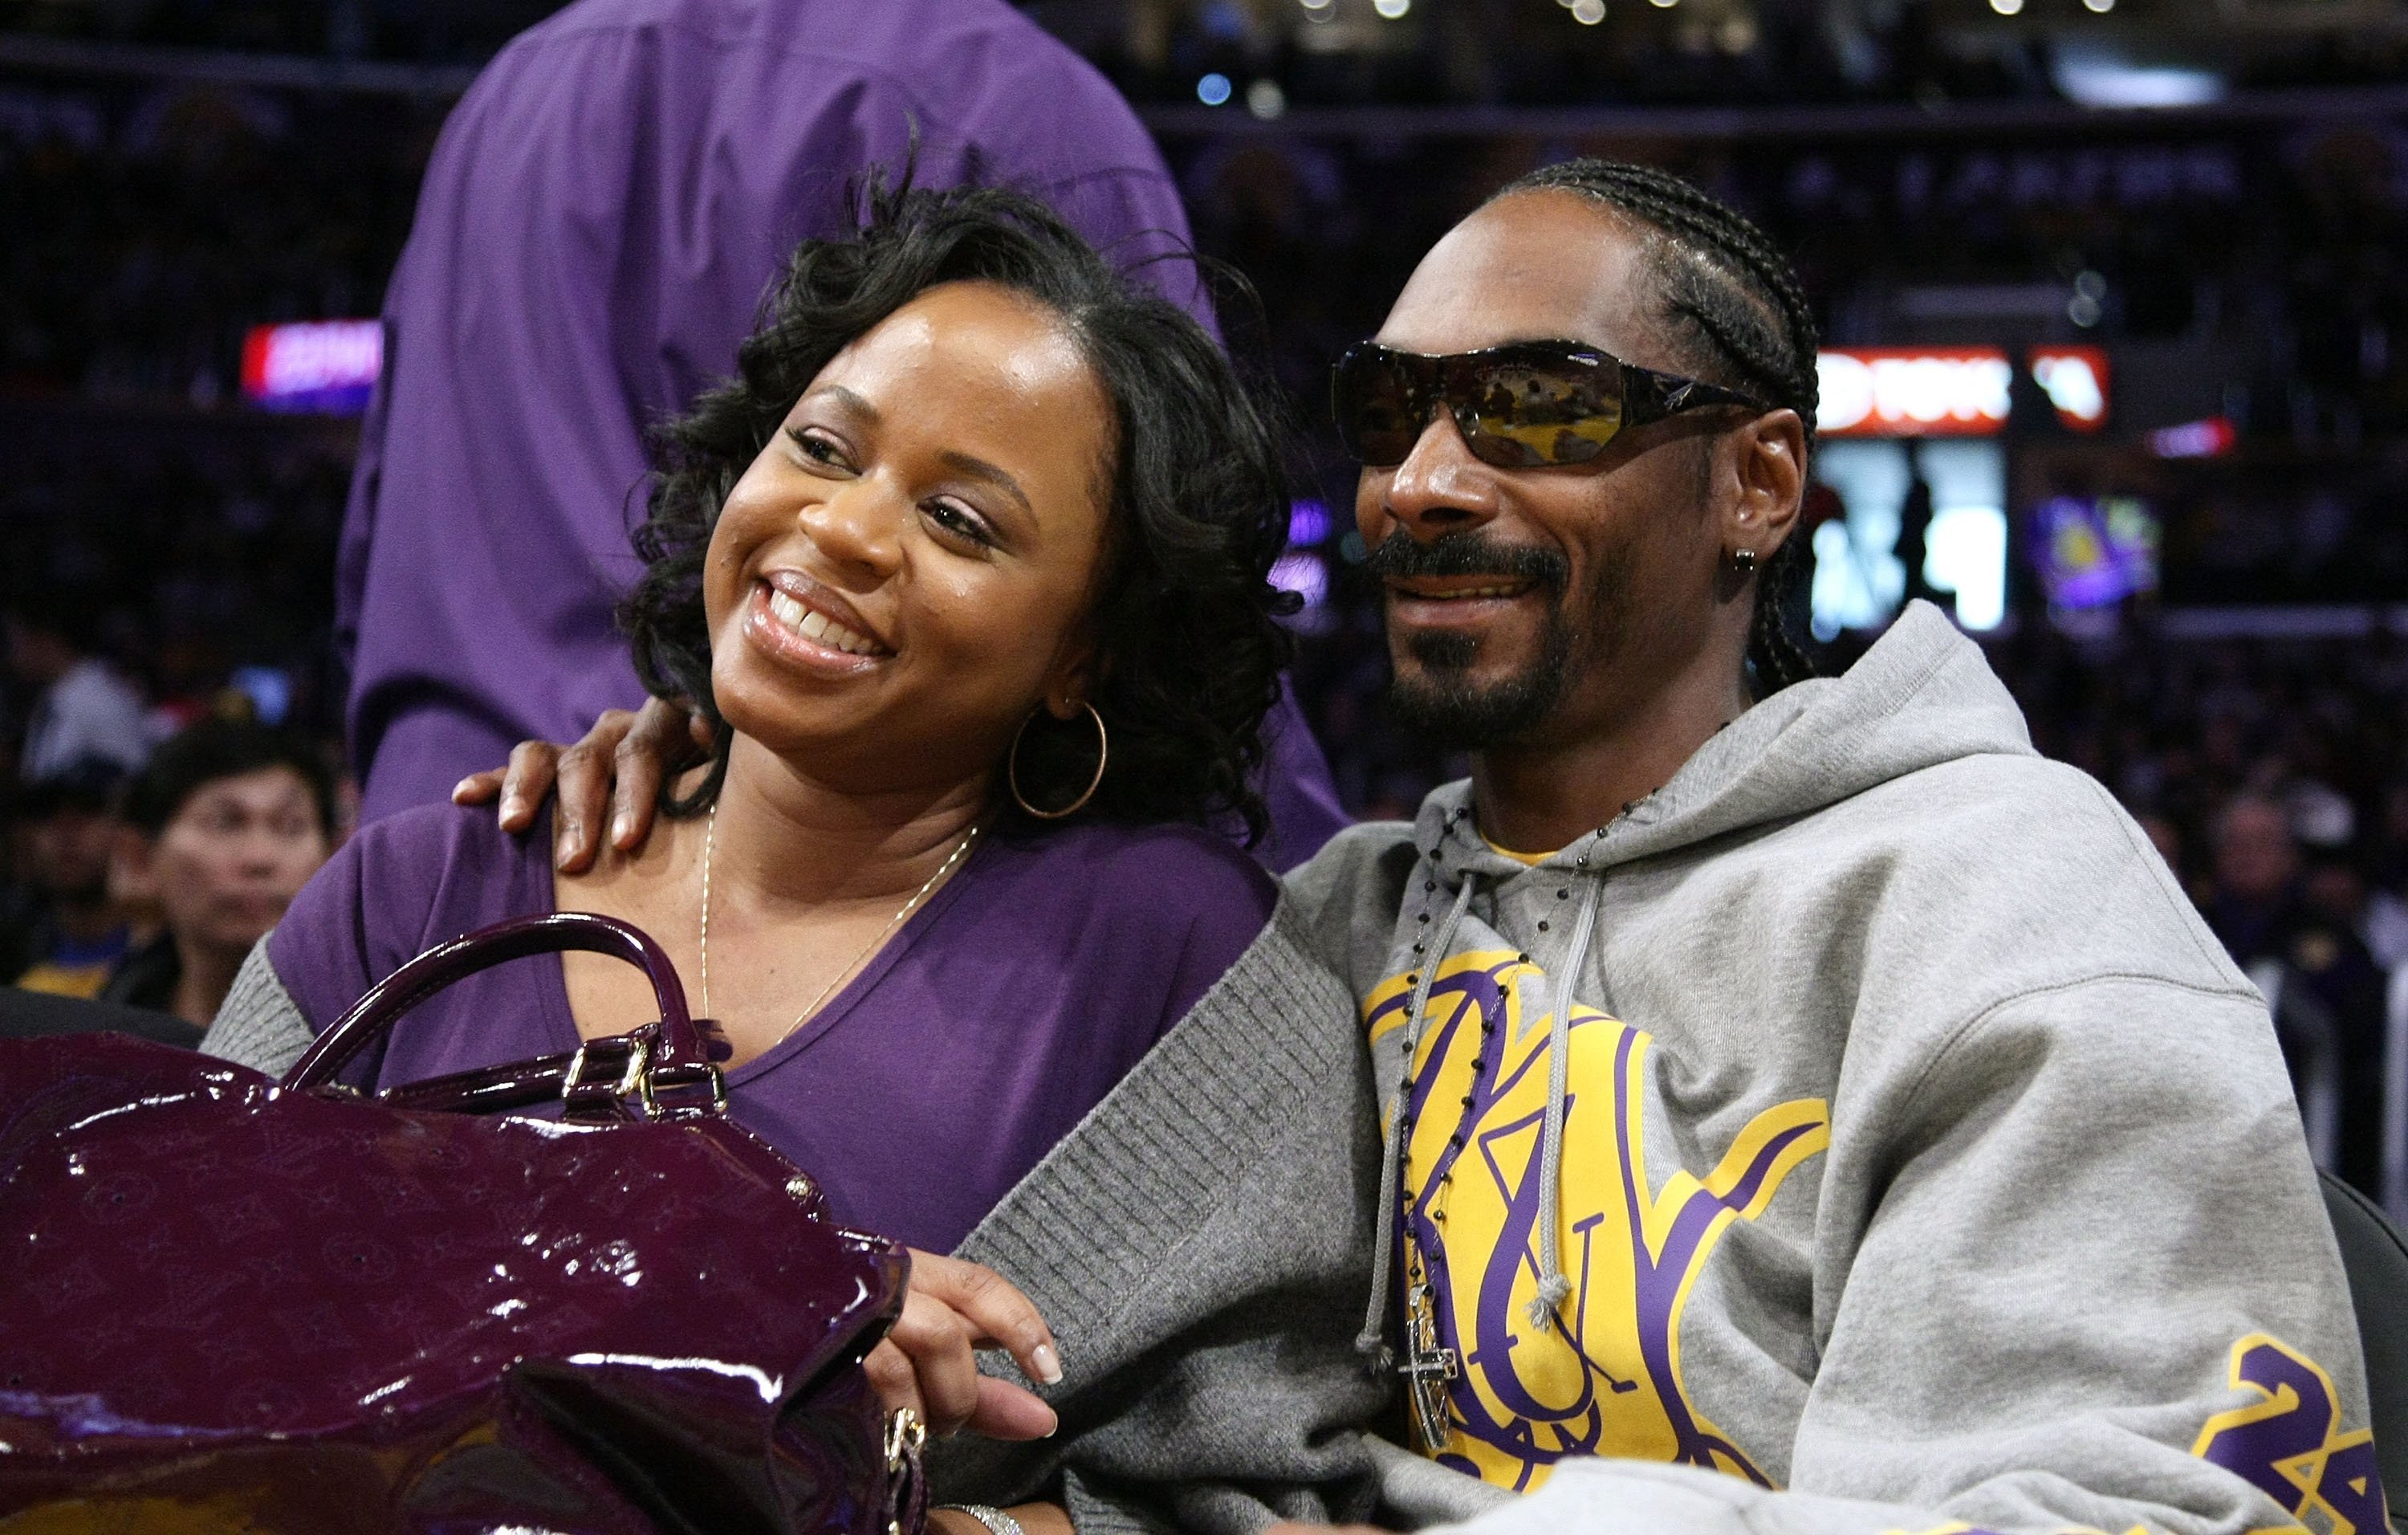 Snoop Dogg und Shante Broadus besuchen das Los Angeles Lakers vs Boston Celtics Spiel, 2008 | Quelle: Getty Images